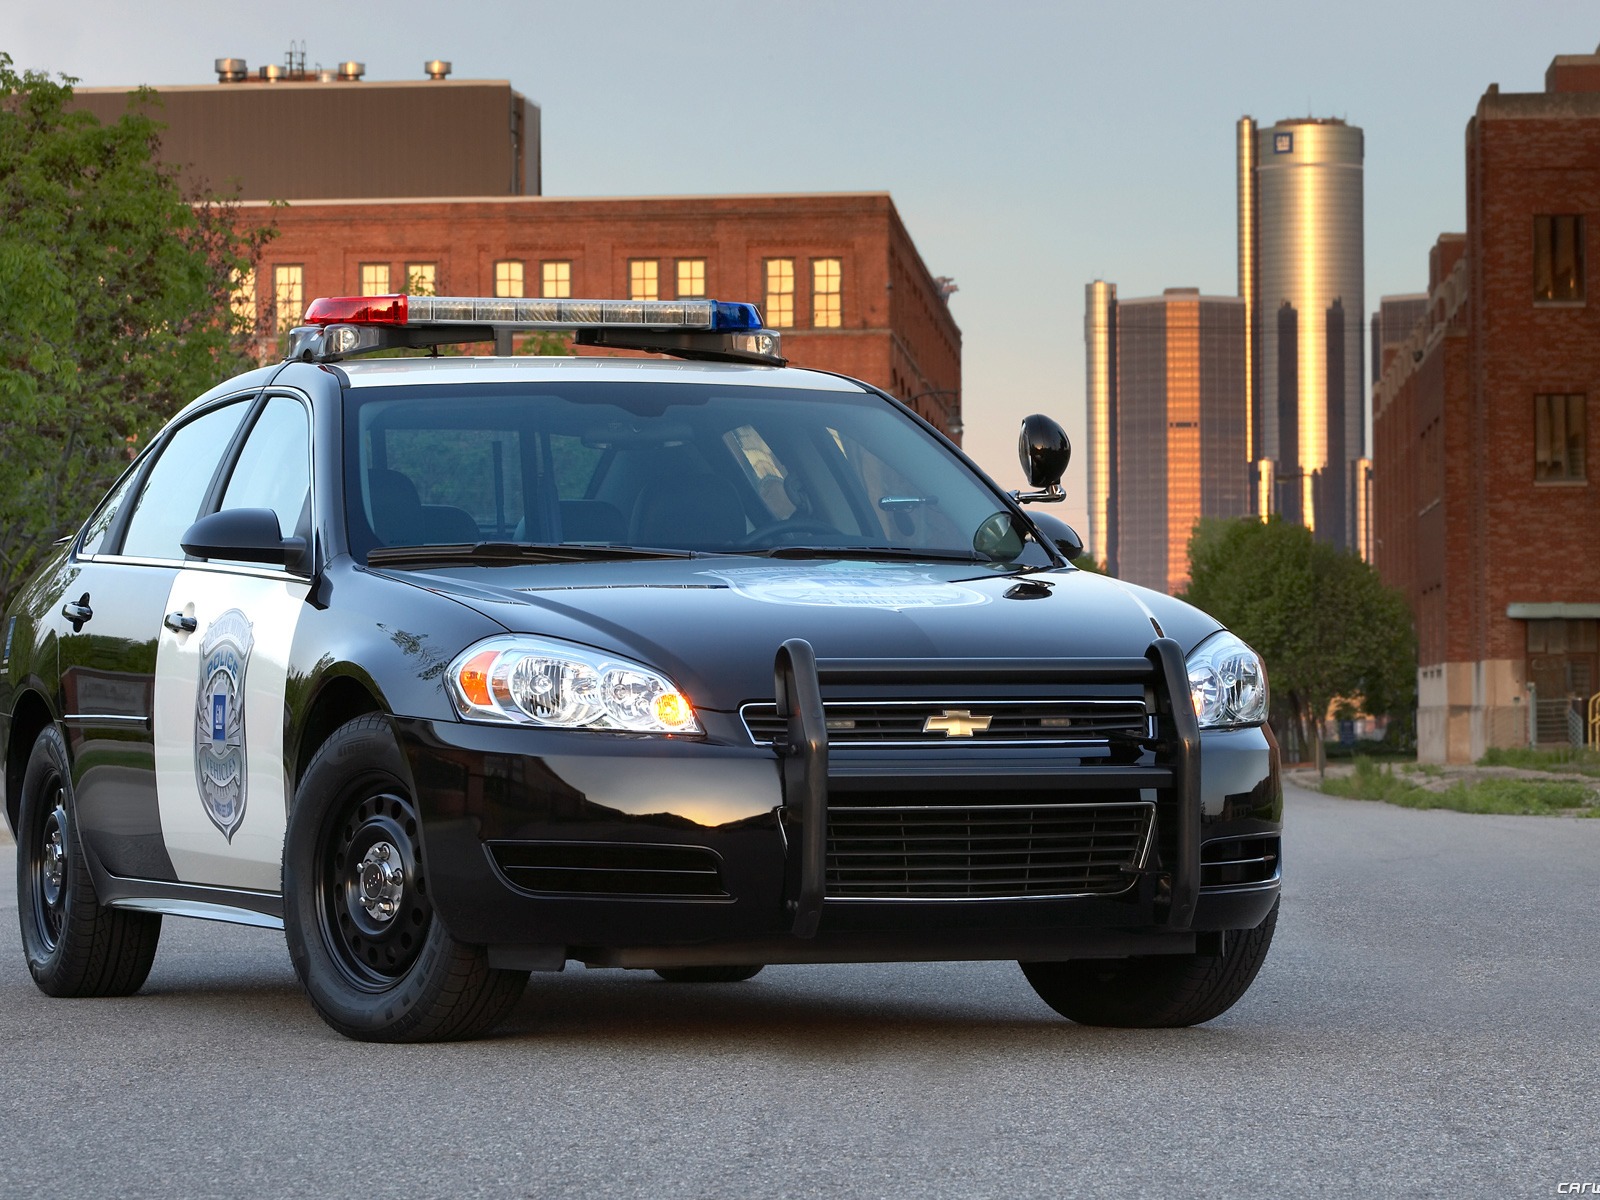 Chevrolet Impala Police Vehicle - 2011 雪佛蘭 #3 - 1600x1200